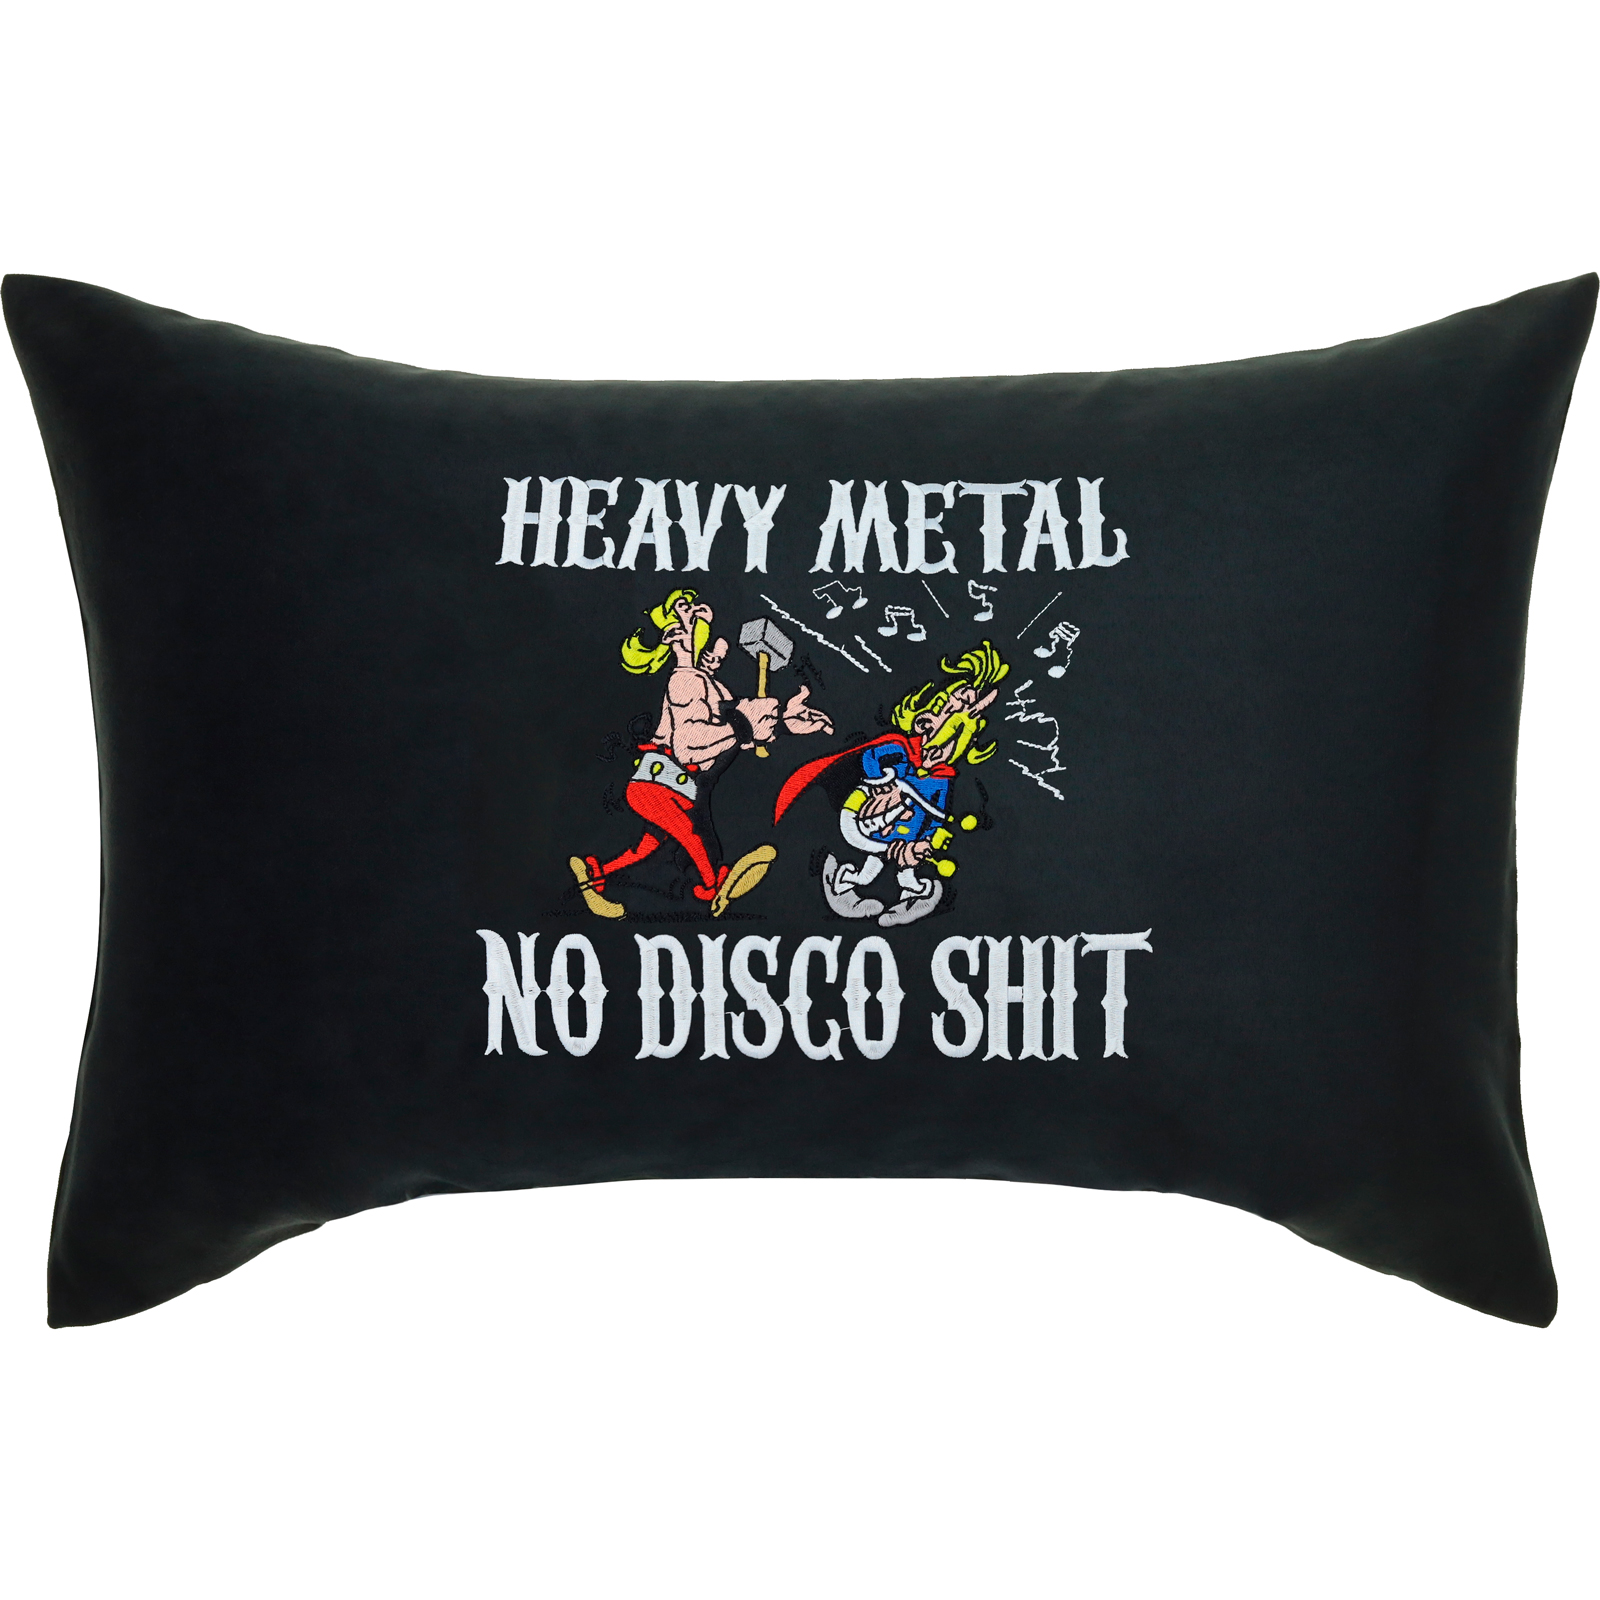 Heavy Metal! No Discoshit